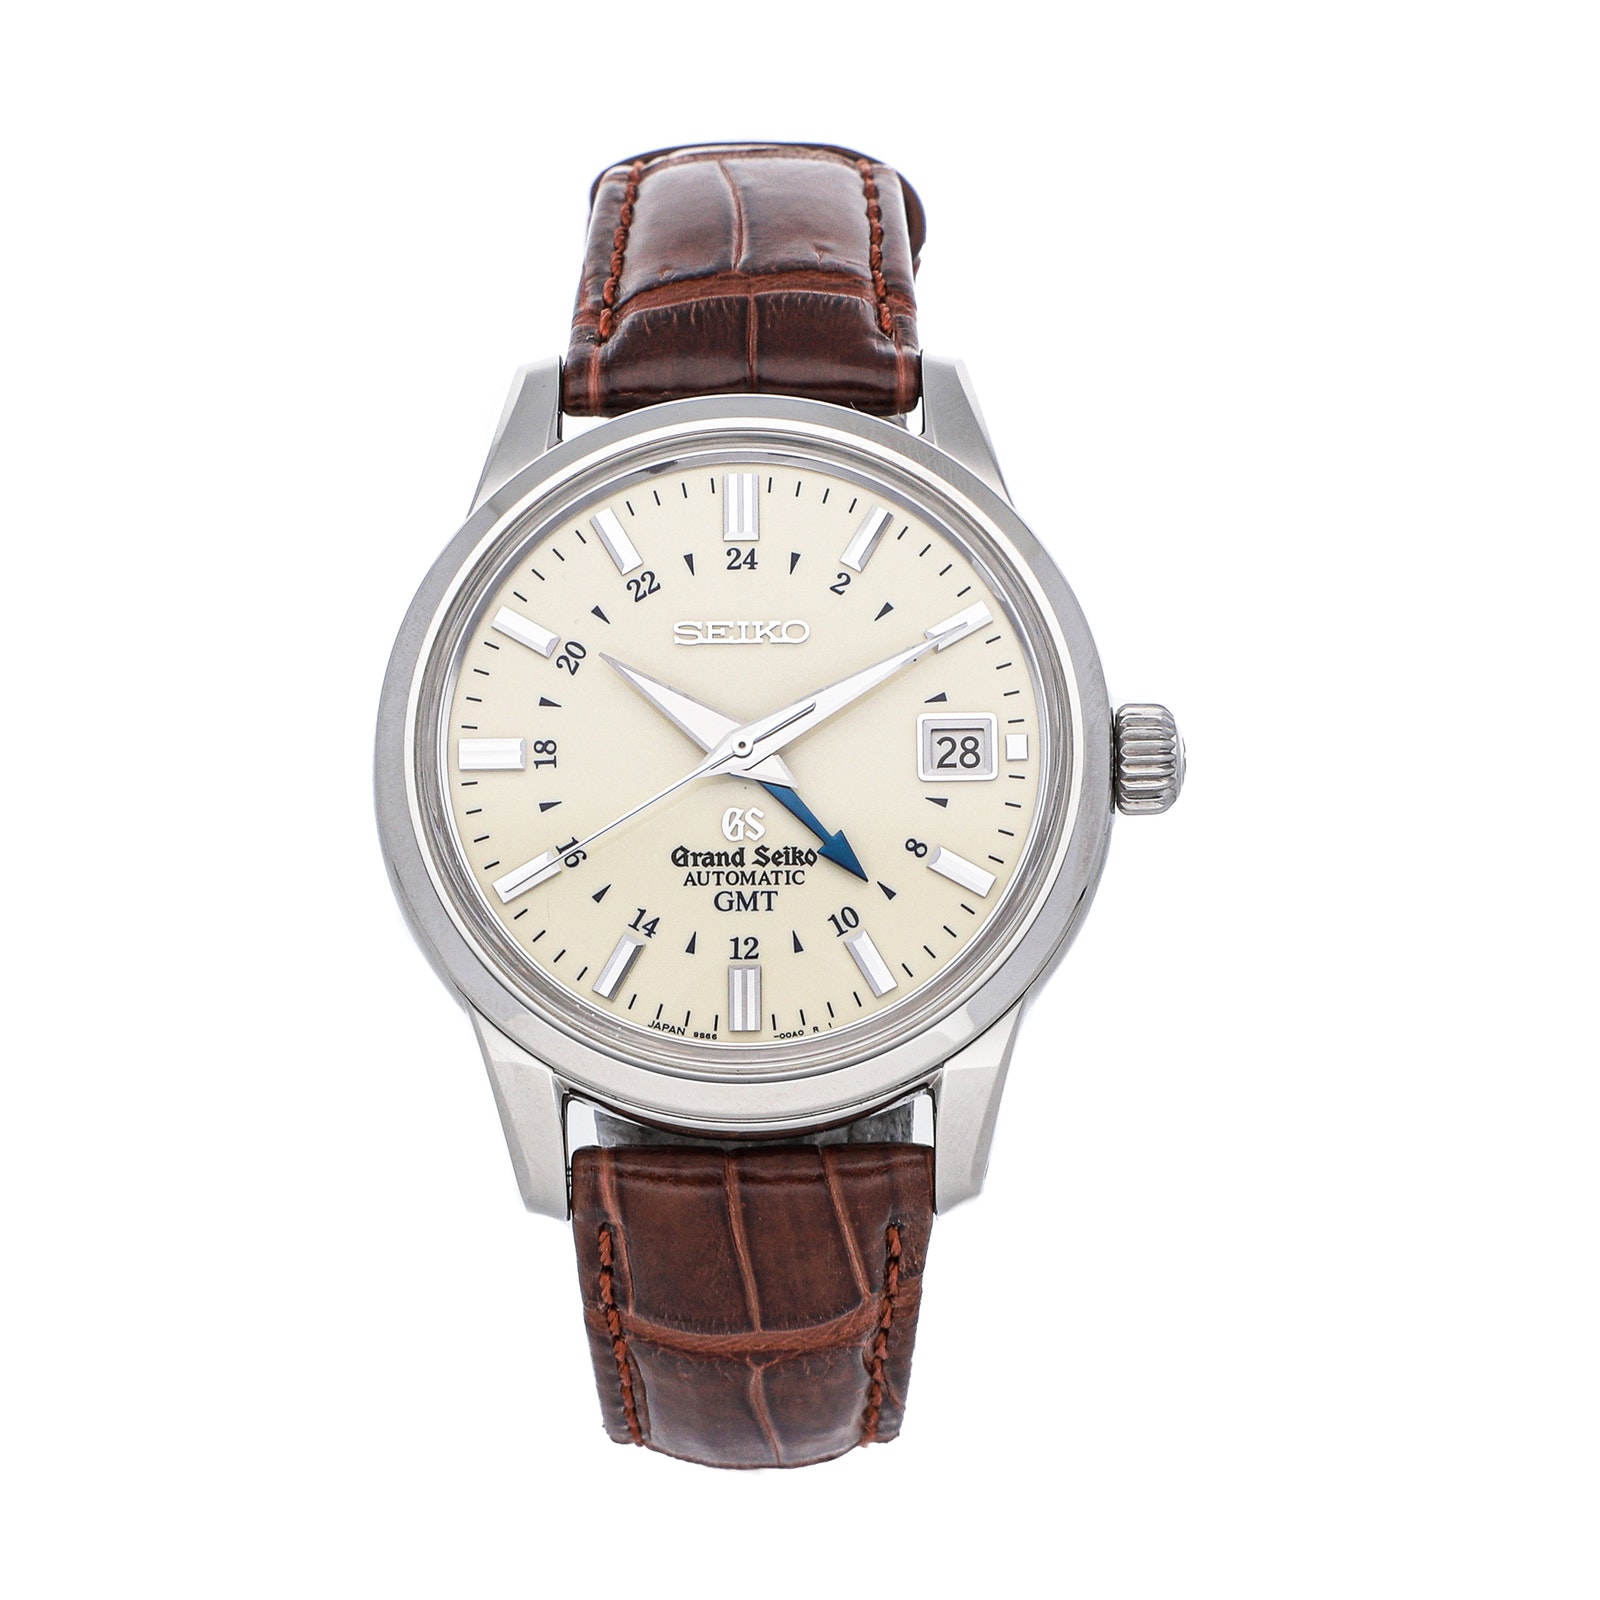 Grand Seiko Automatic GMT (SBGM021) Market Price | WatchCharts